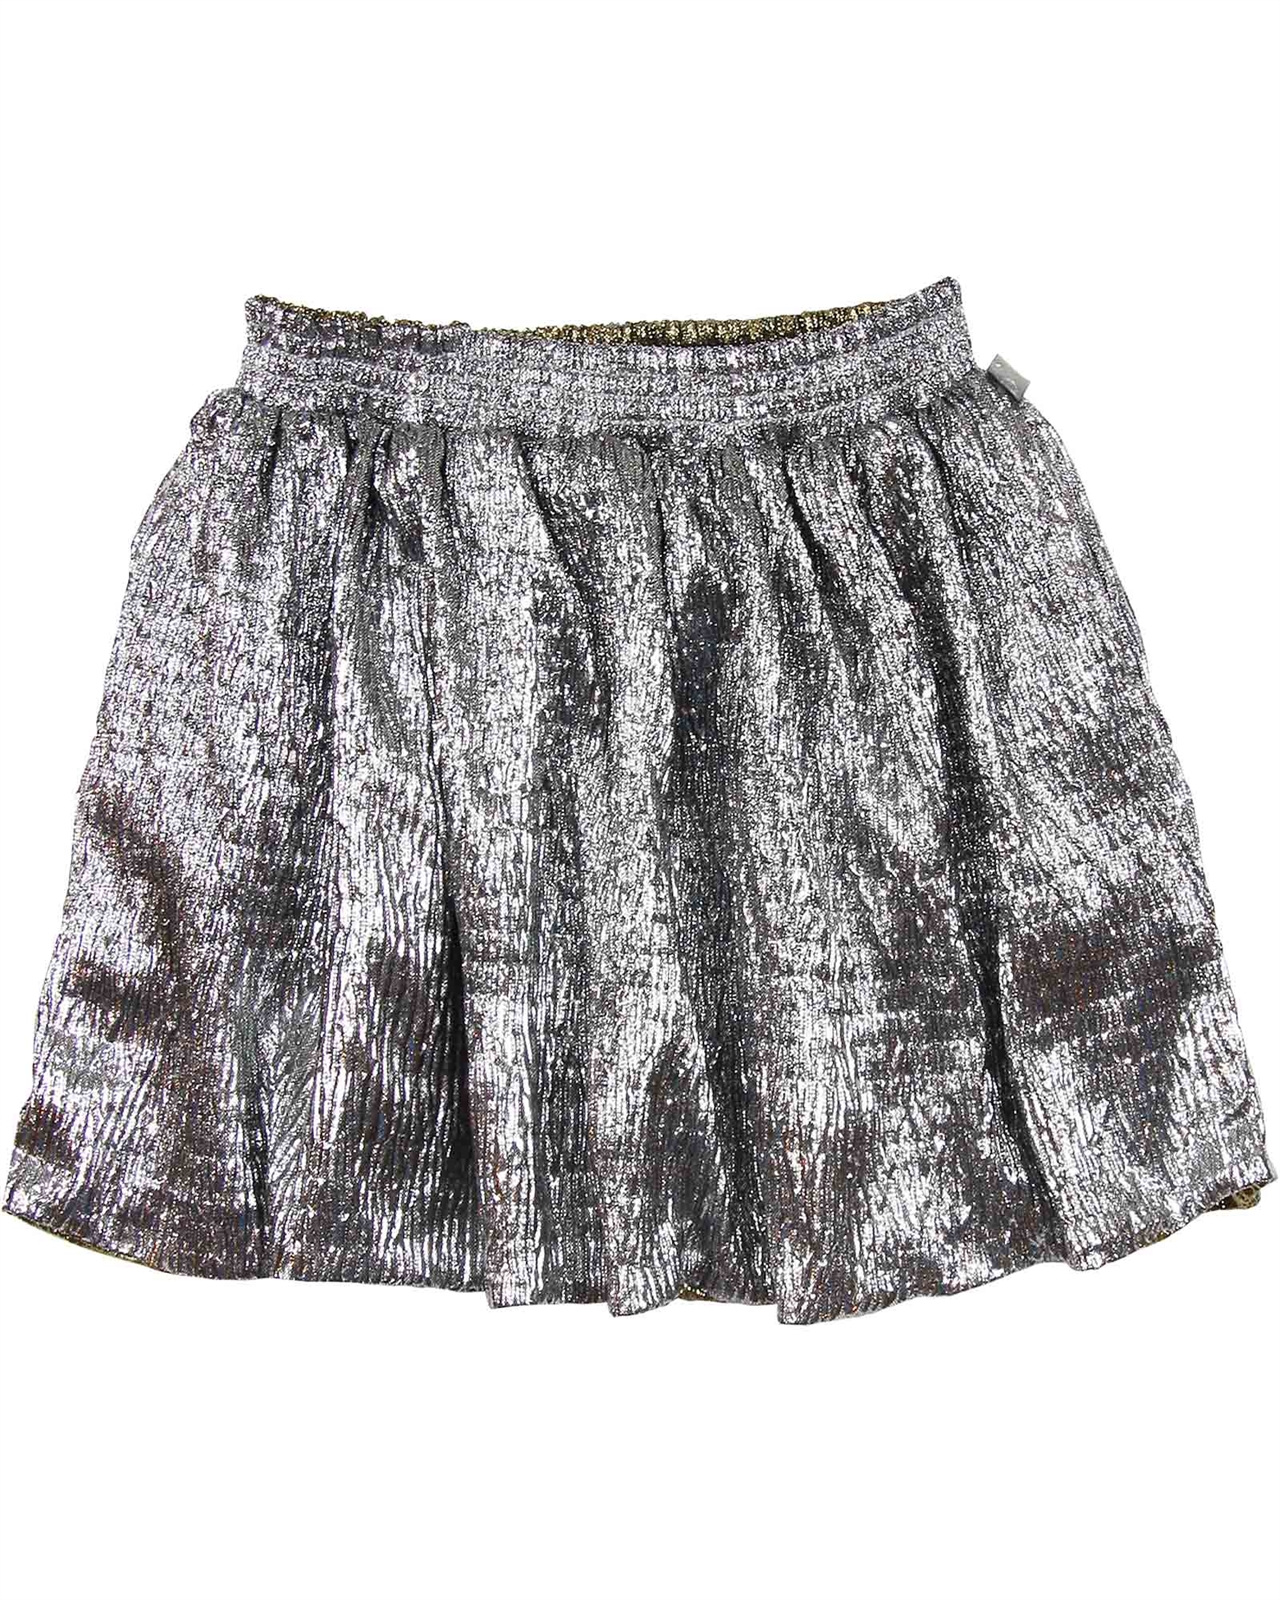 BOBOLI Girl's Knit Sparkly Skirt, Sizes 4-16 - Fall/Winter 2019-2020 ...